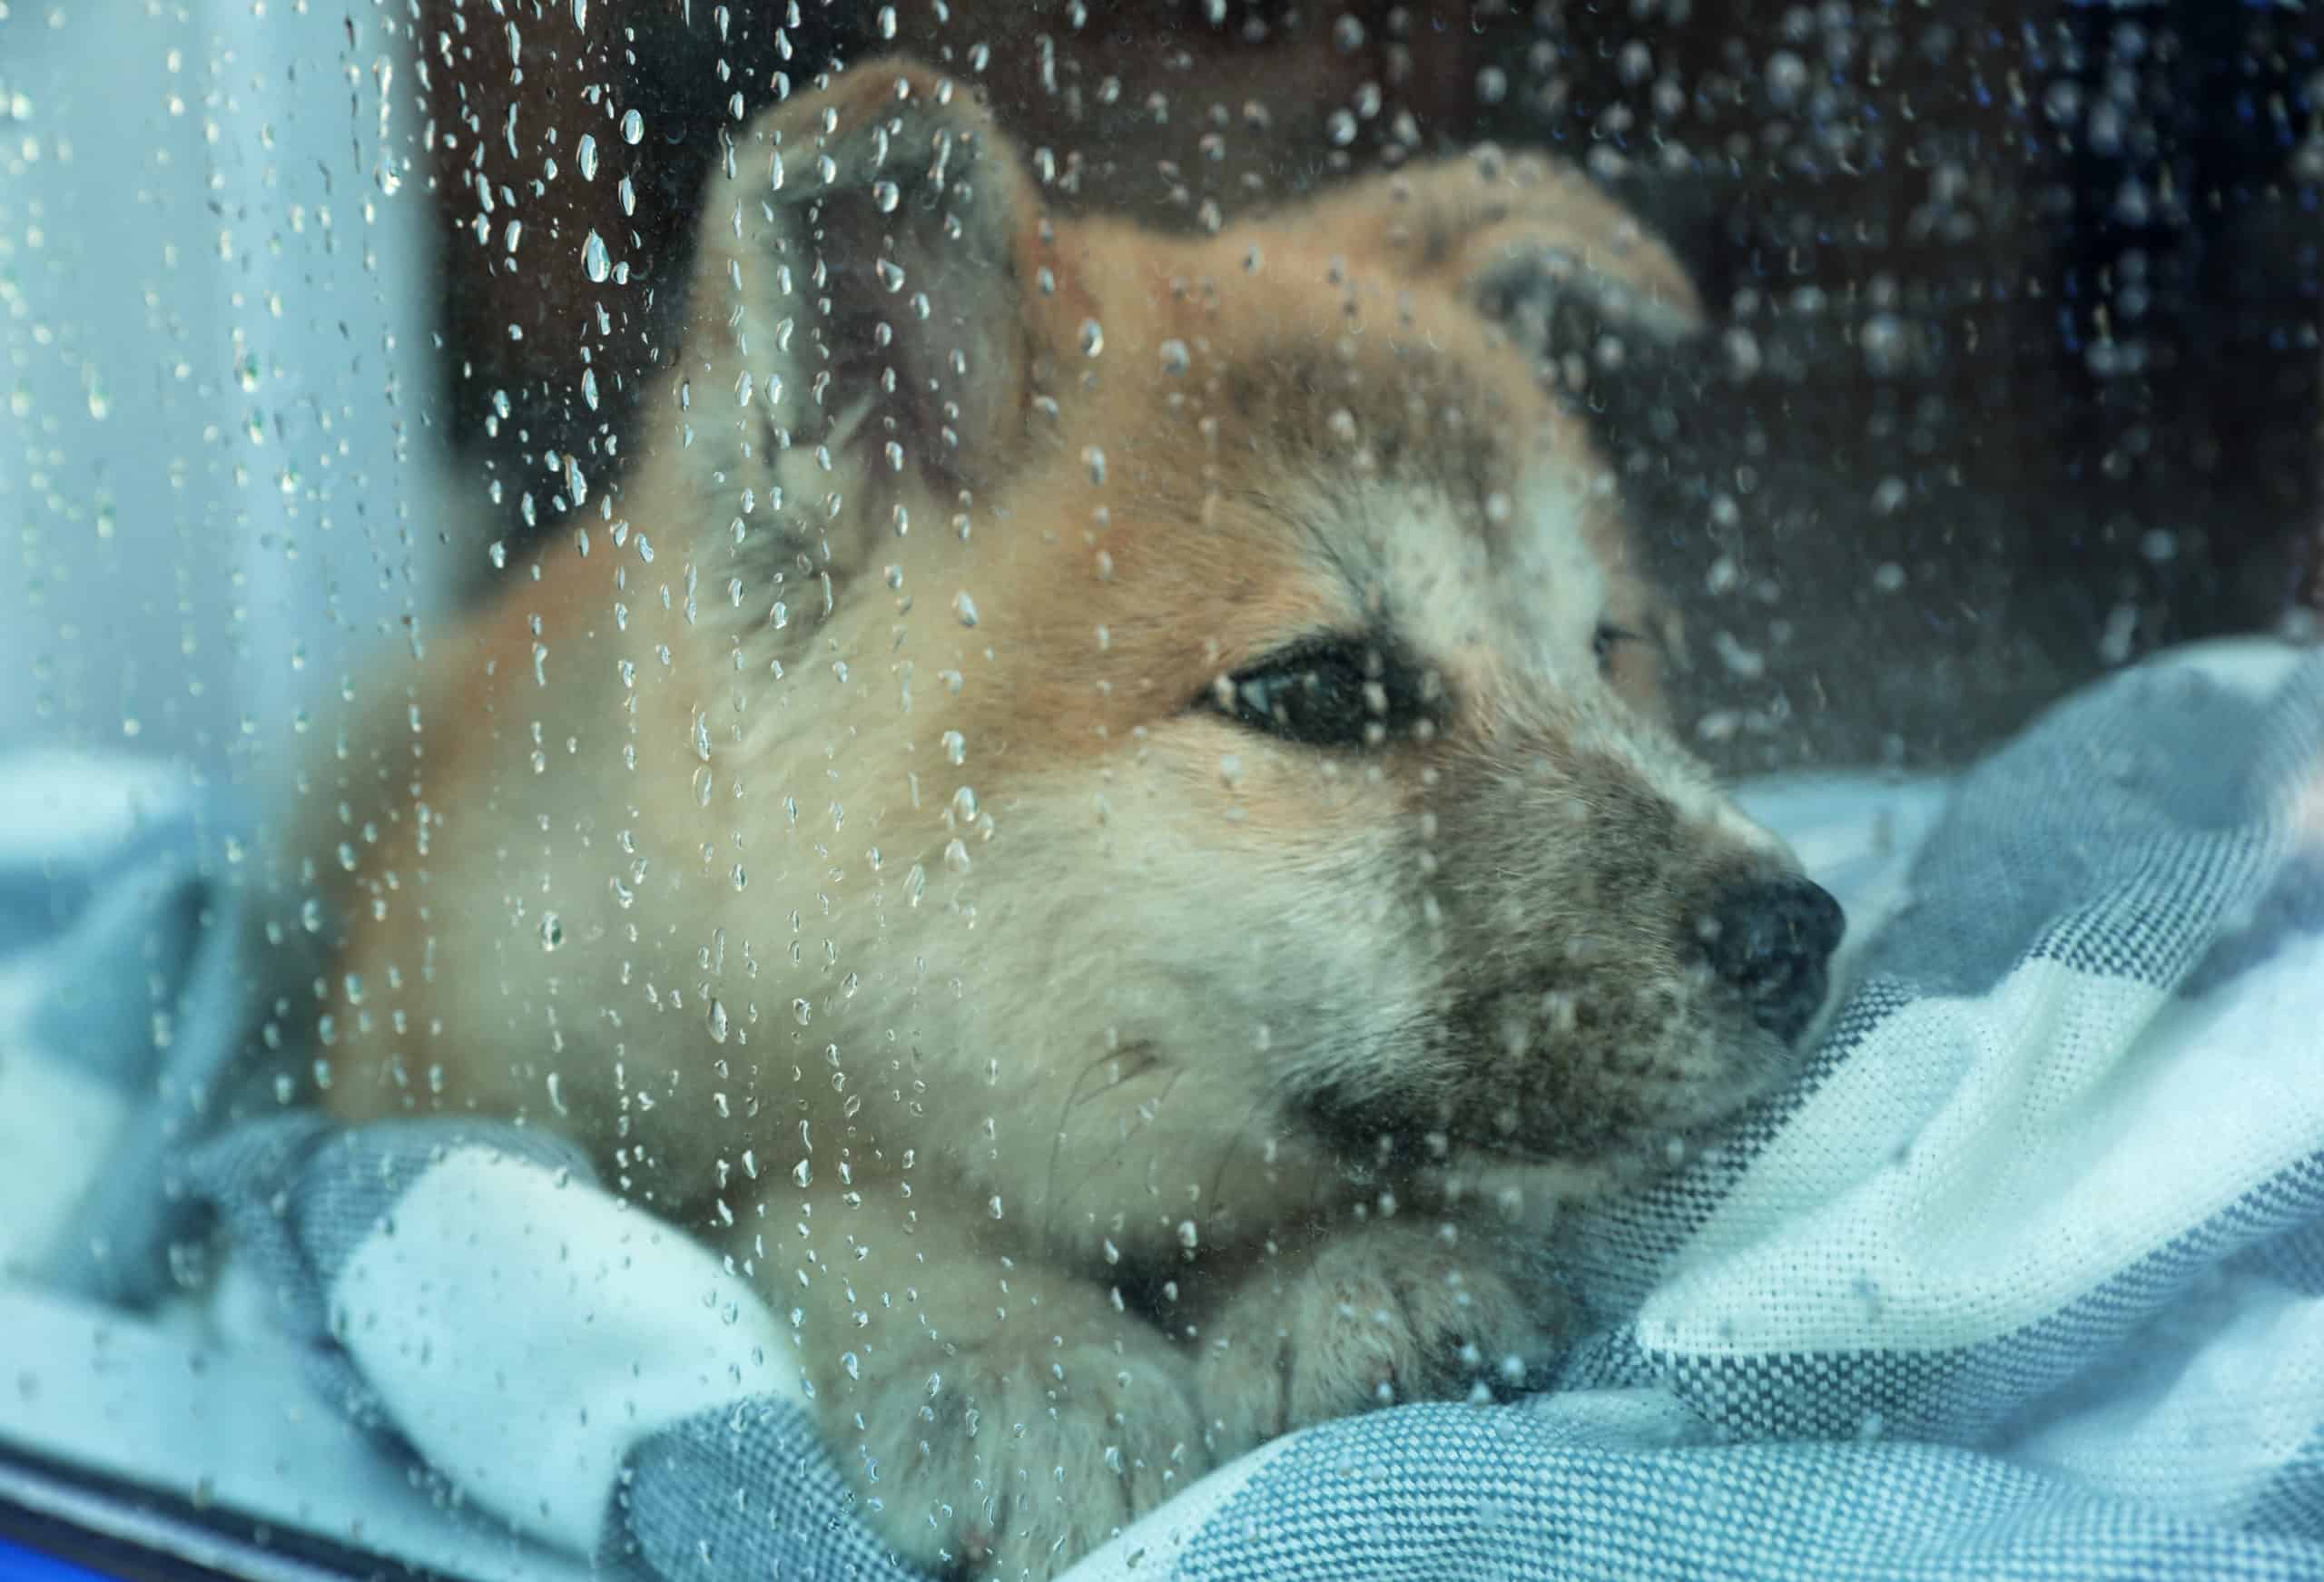 Do dogs sleep more in rainy weather?